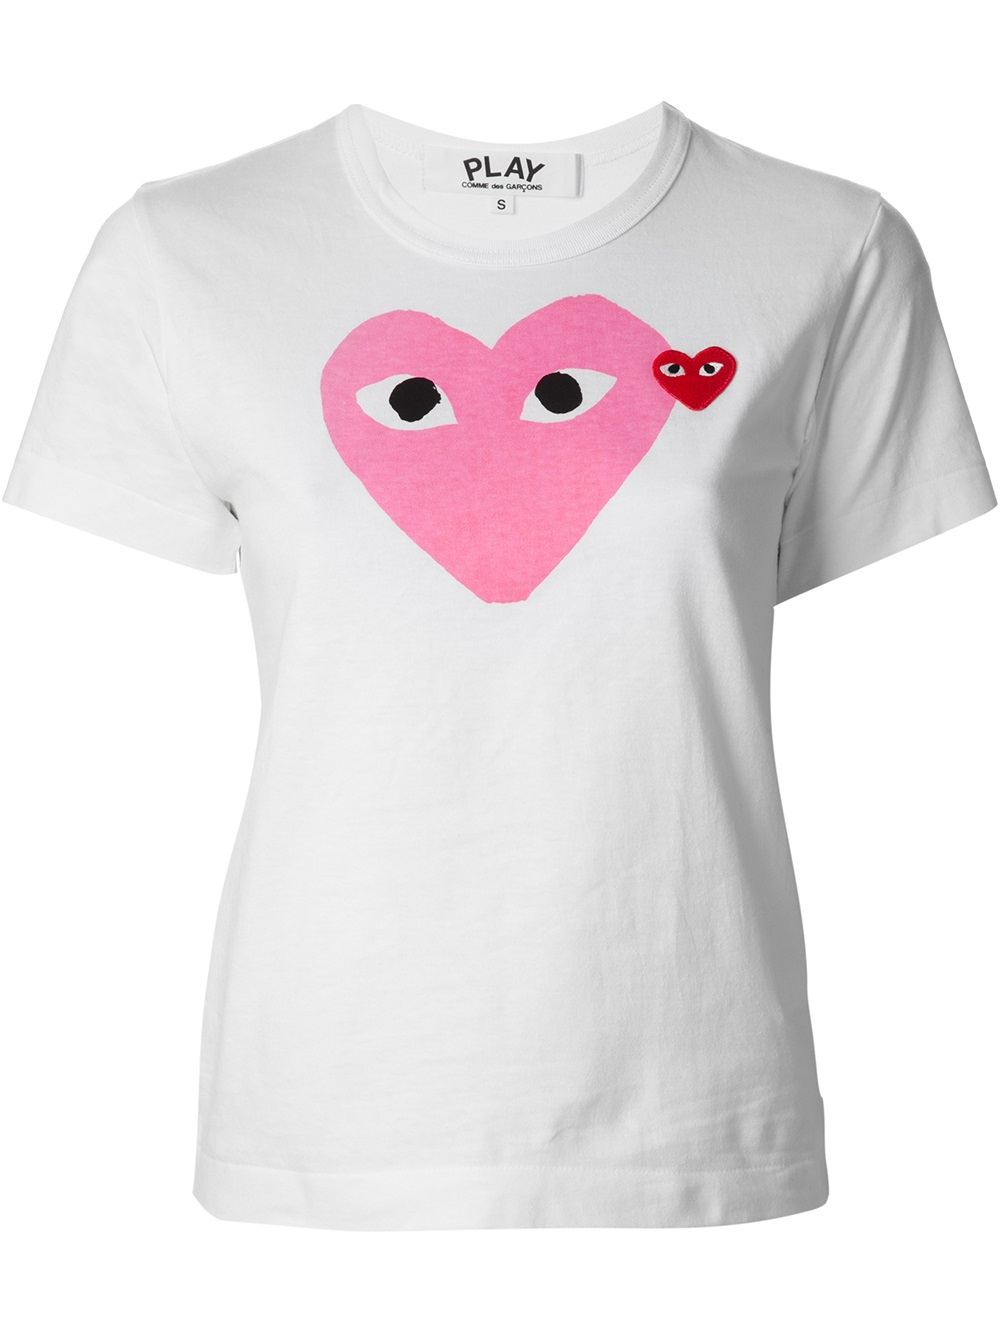 Comme des Garçons Heart Print T-Shirt in White (Pink) - Lyst